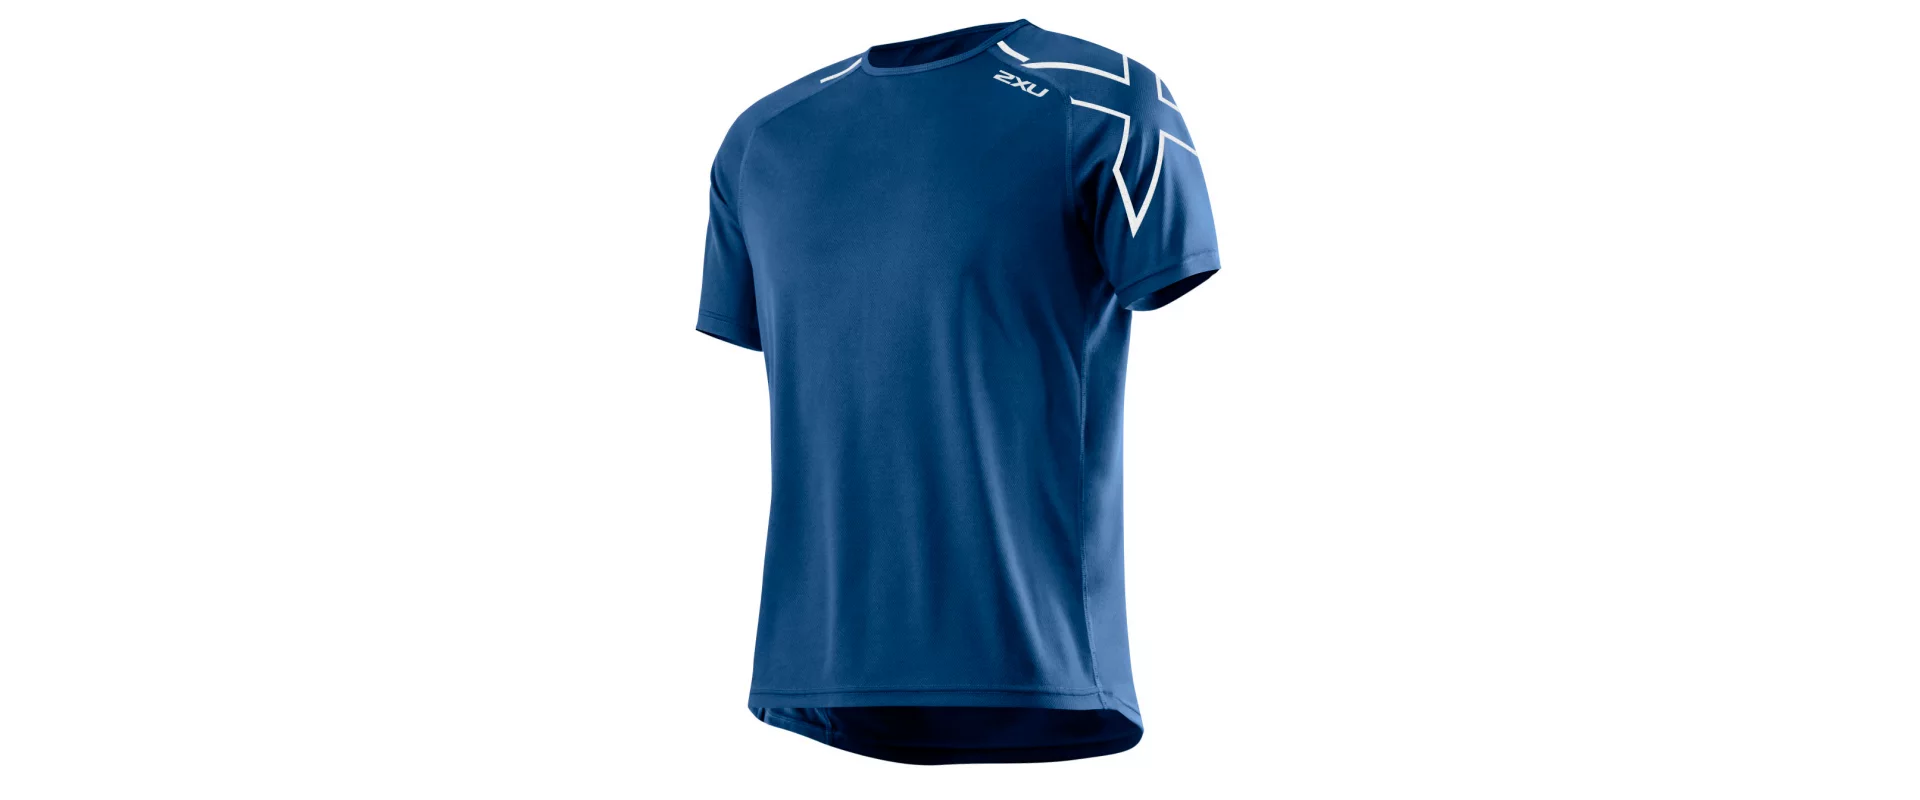 2XU T-Short / Мужская футболка для бега